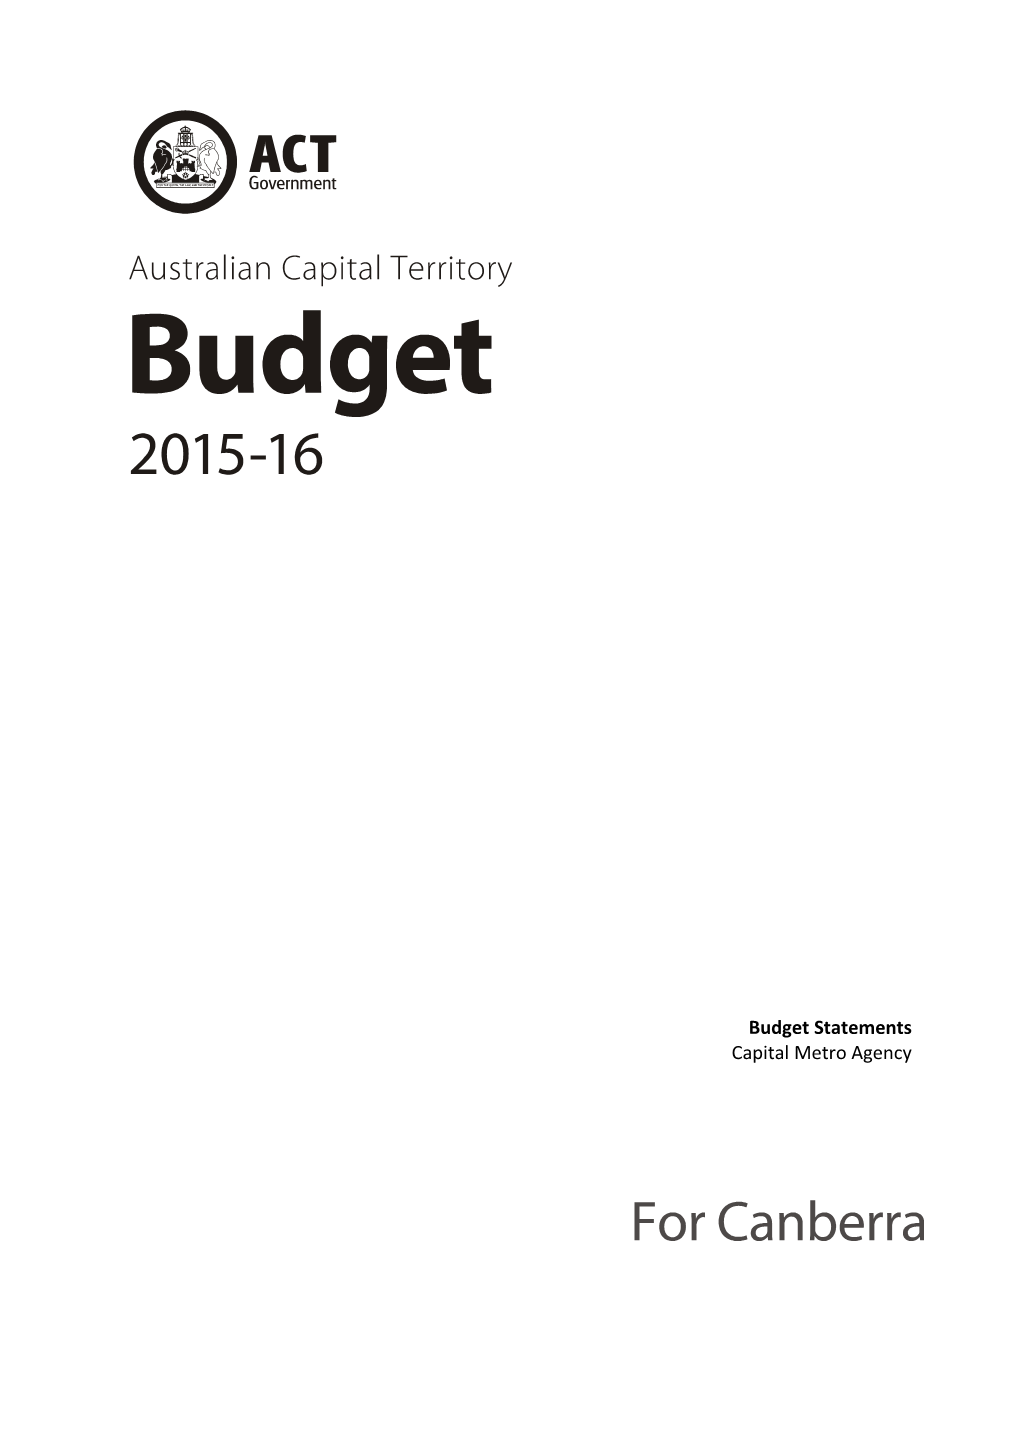 2015-16 Capital Metro Agency Budget Statement